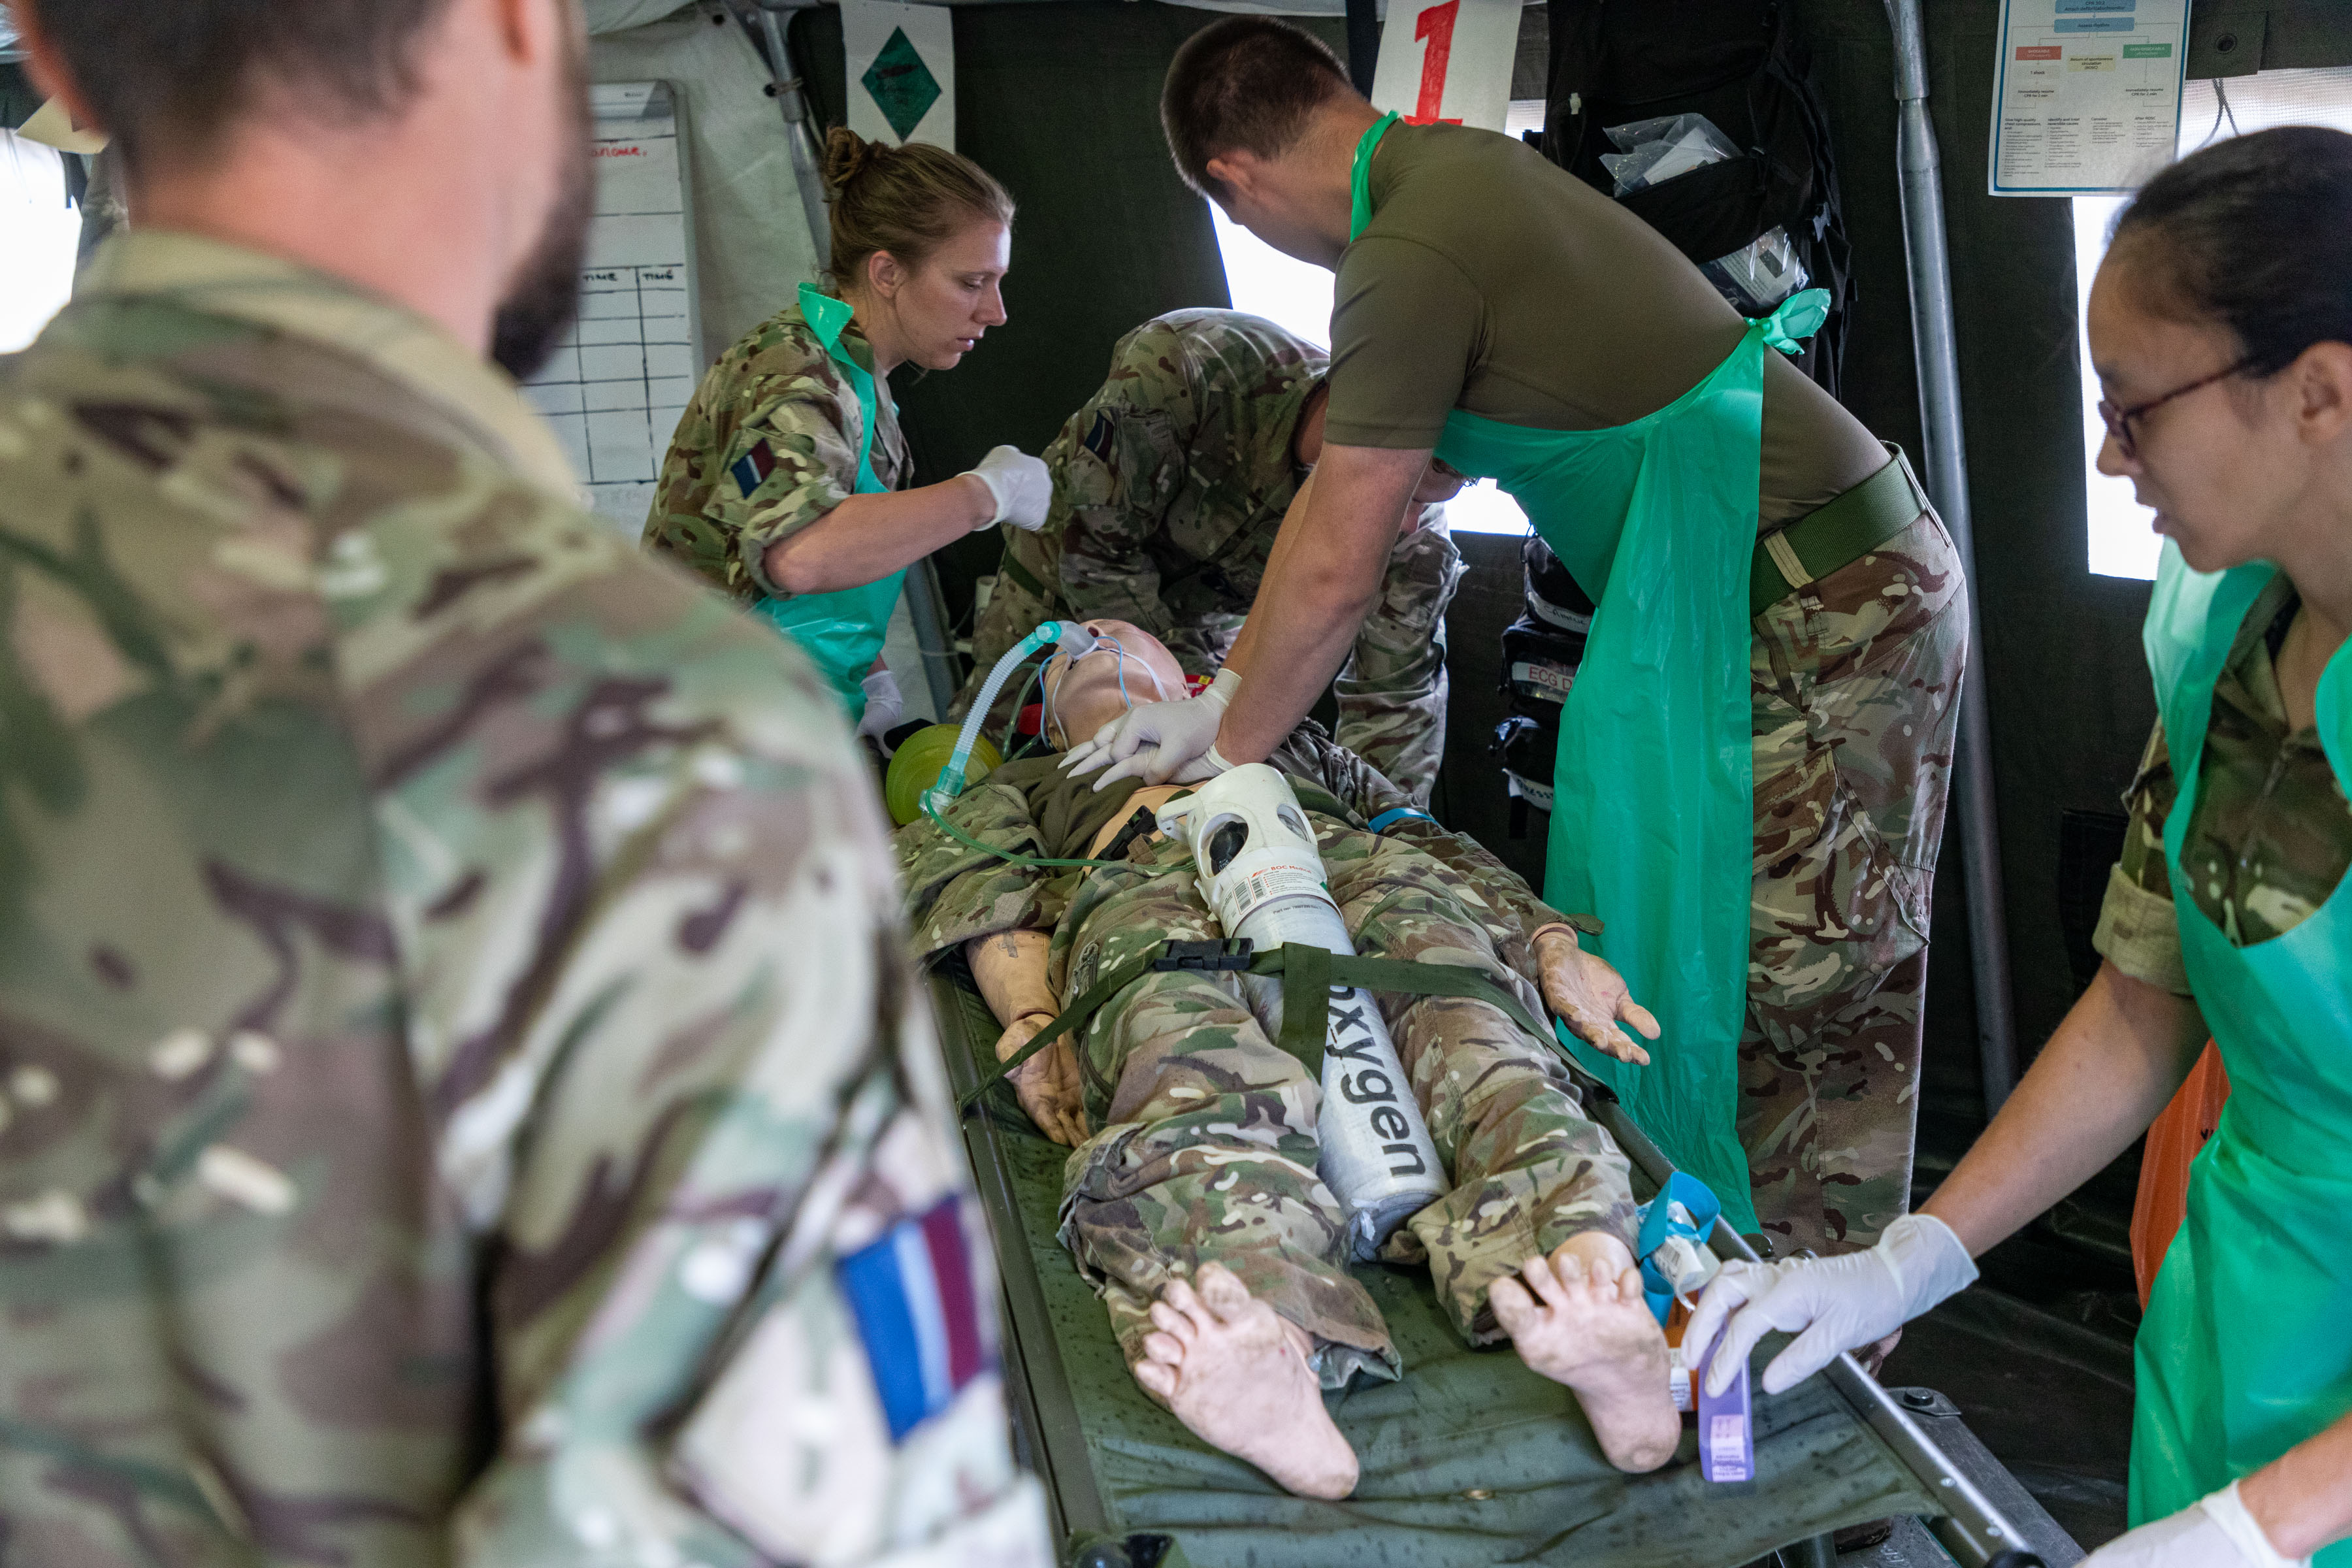 RAF medical personnel in resuscitation training